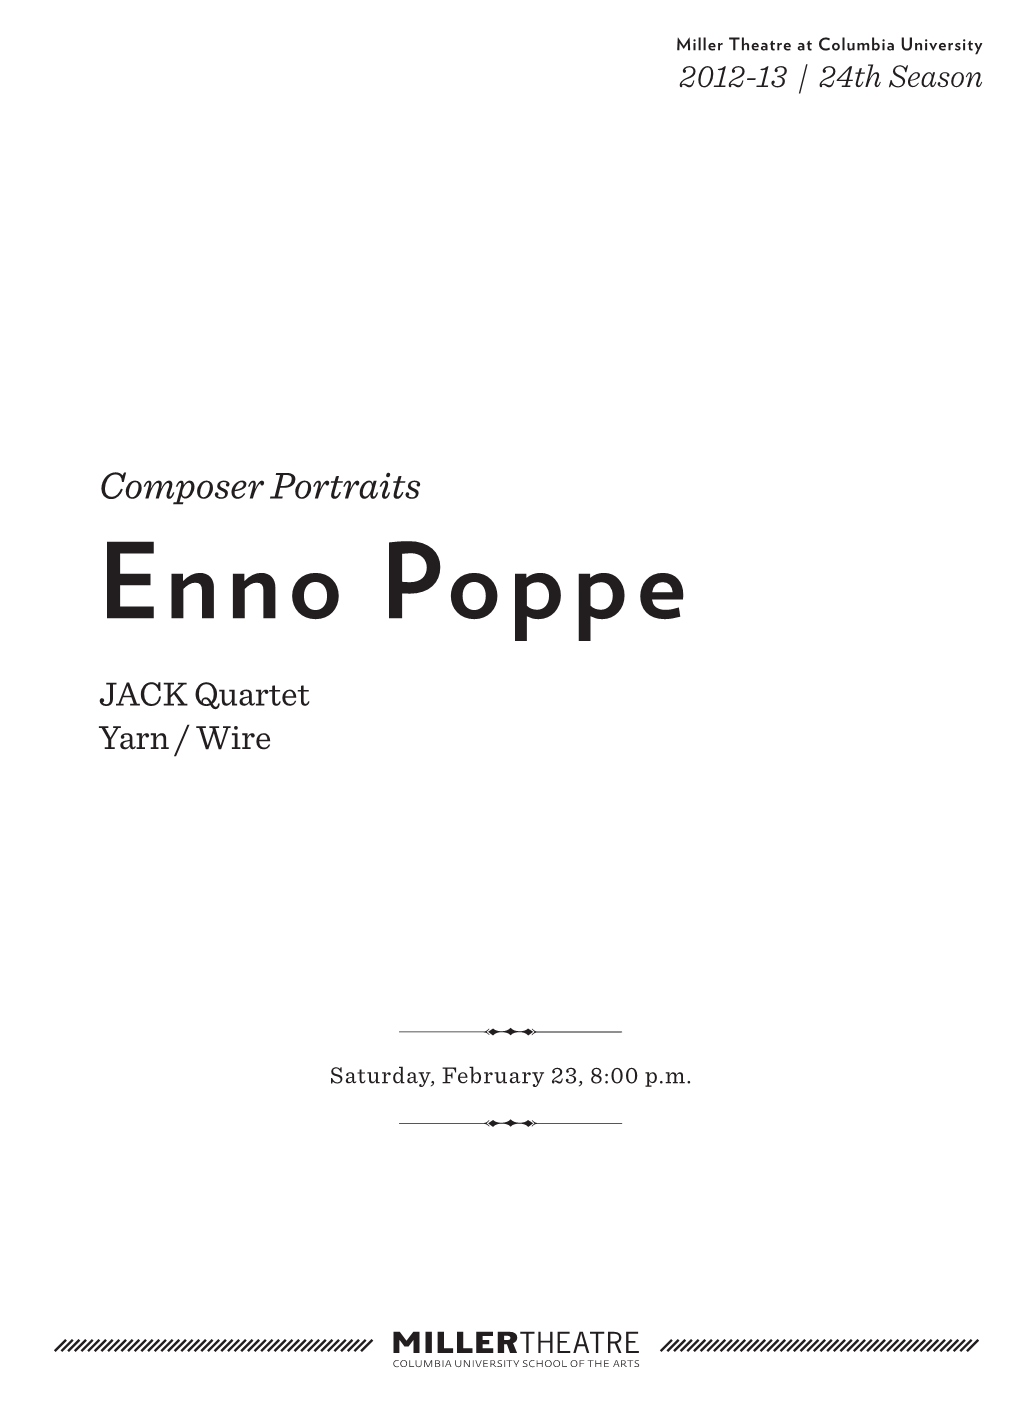 Enno Poppe JACK Quartet Yarn / Wire